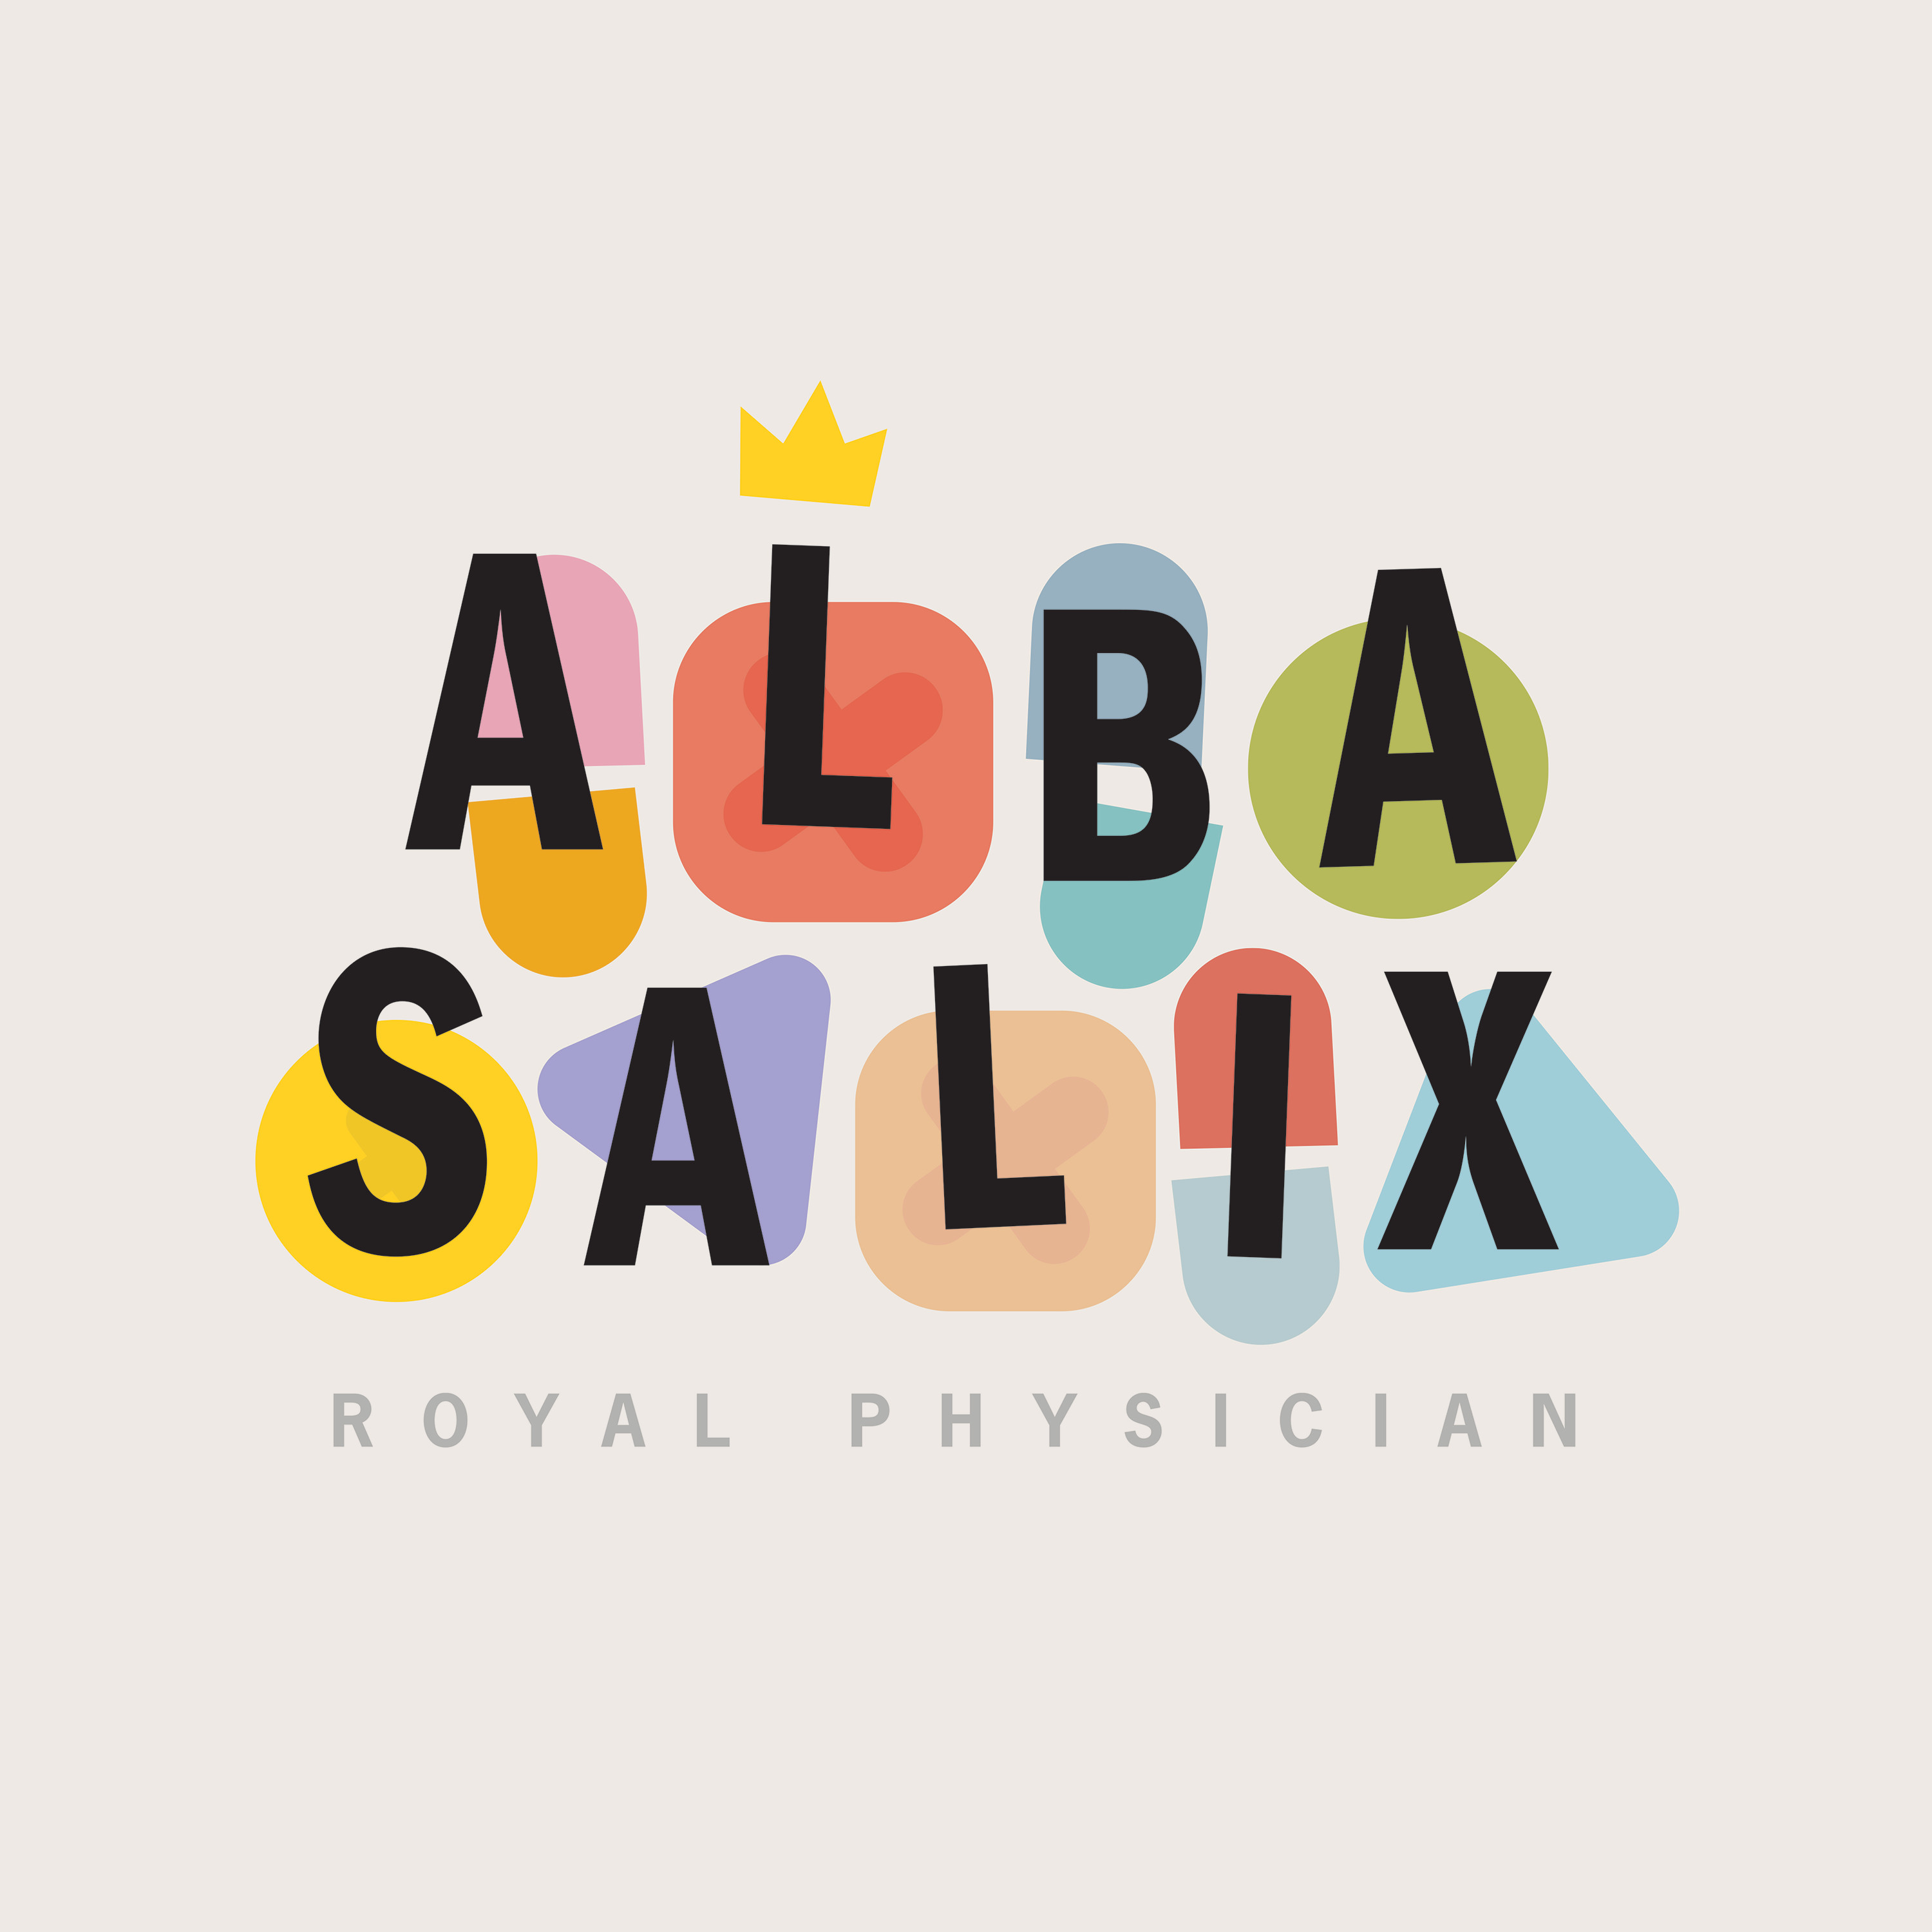 Alba Salix, Royal Physician